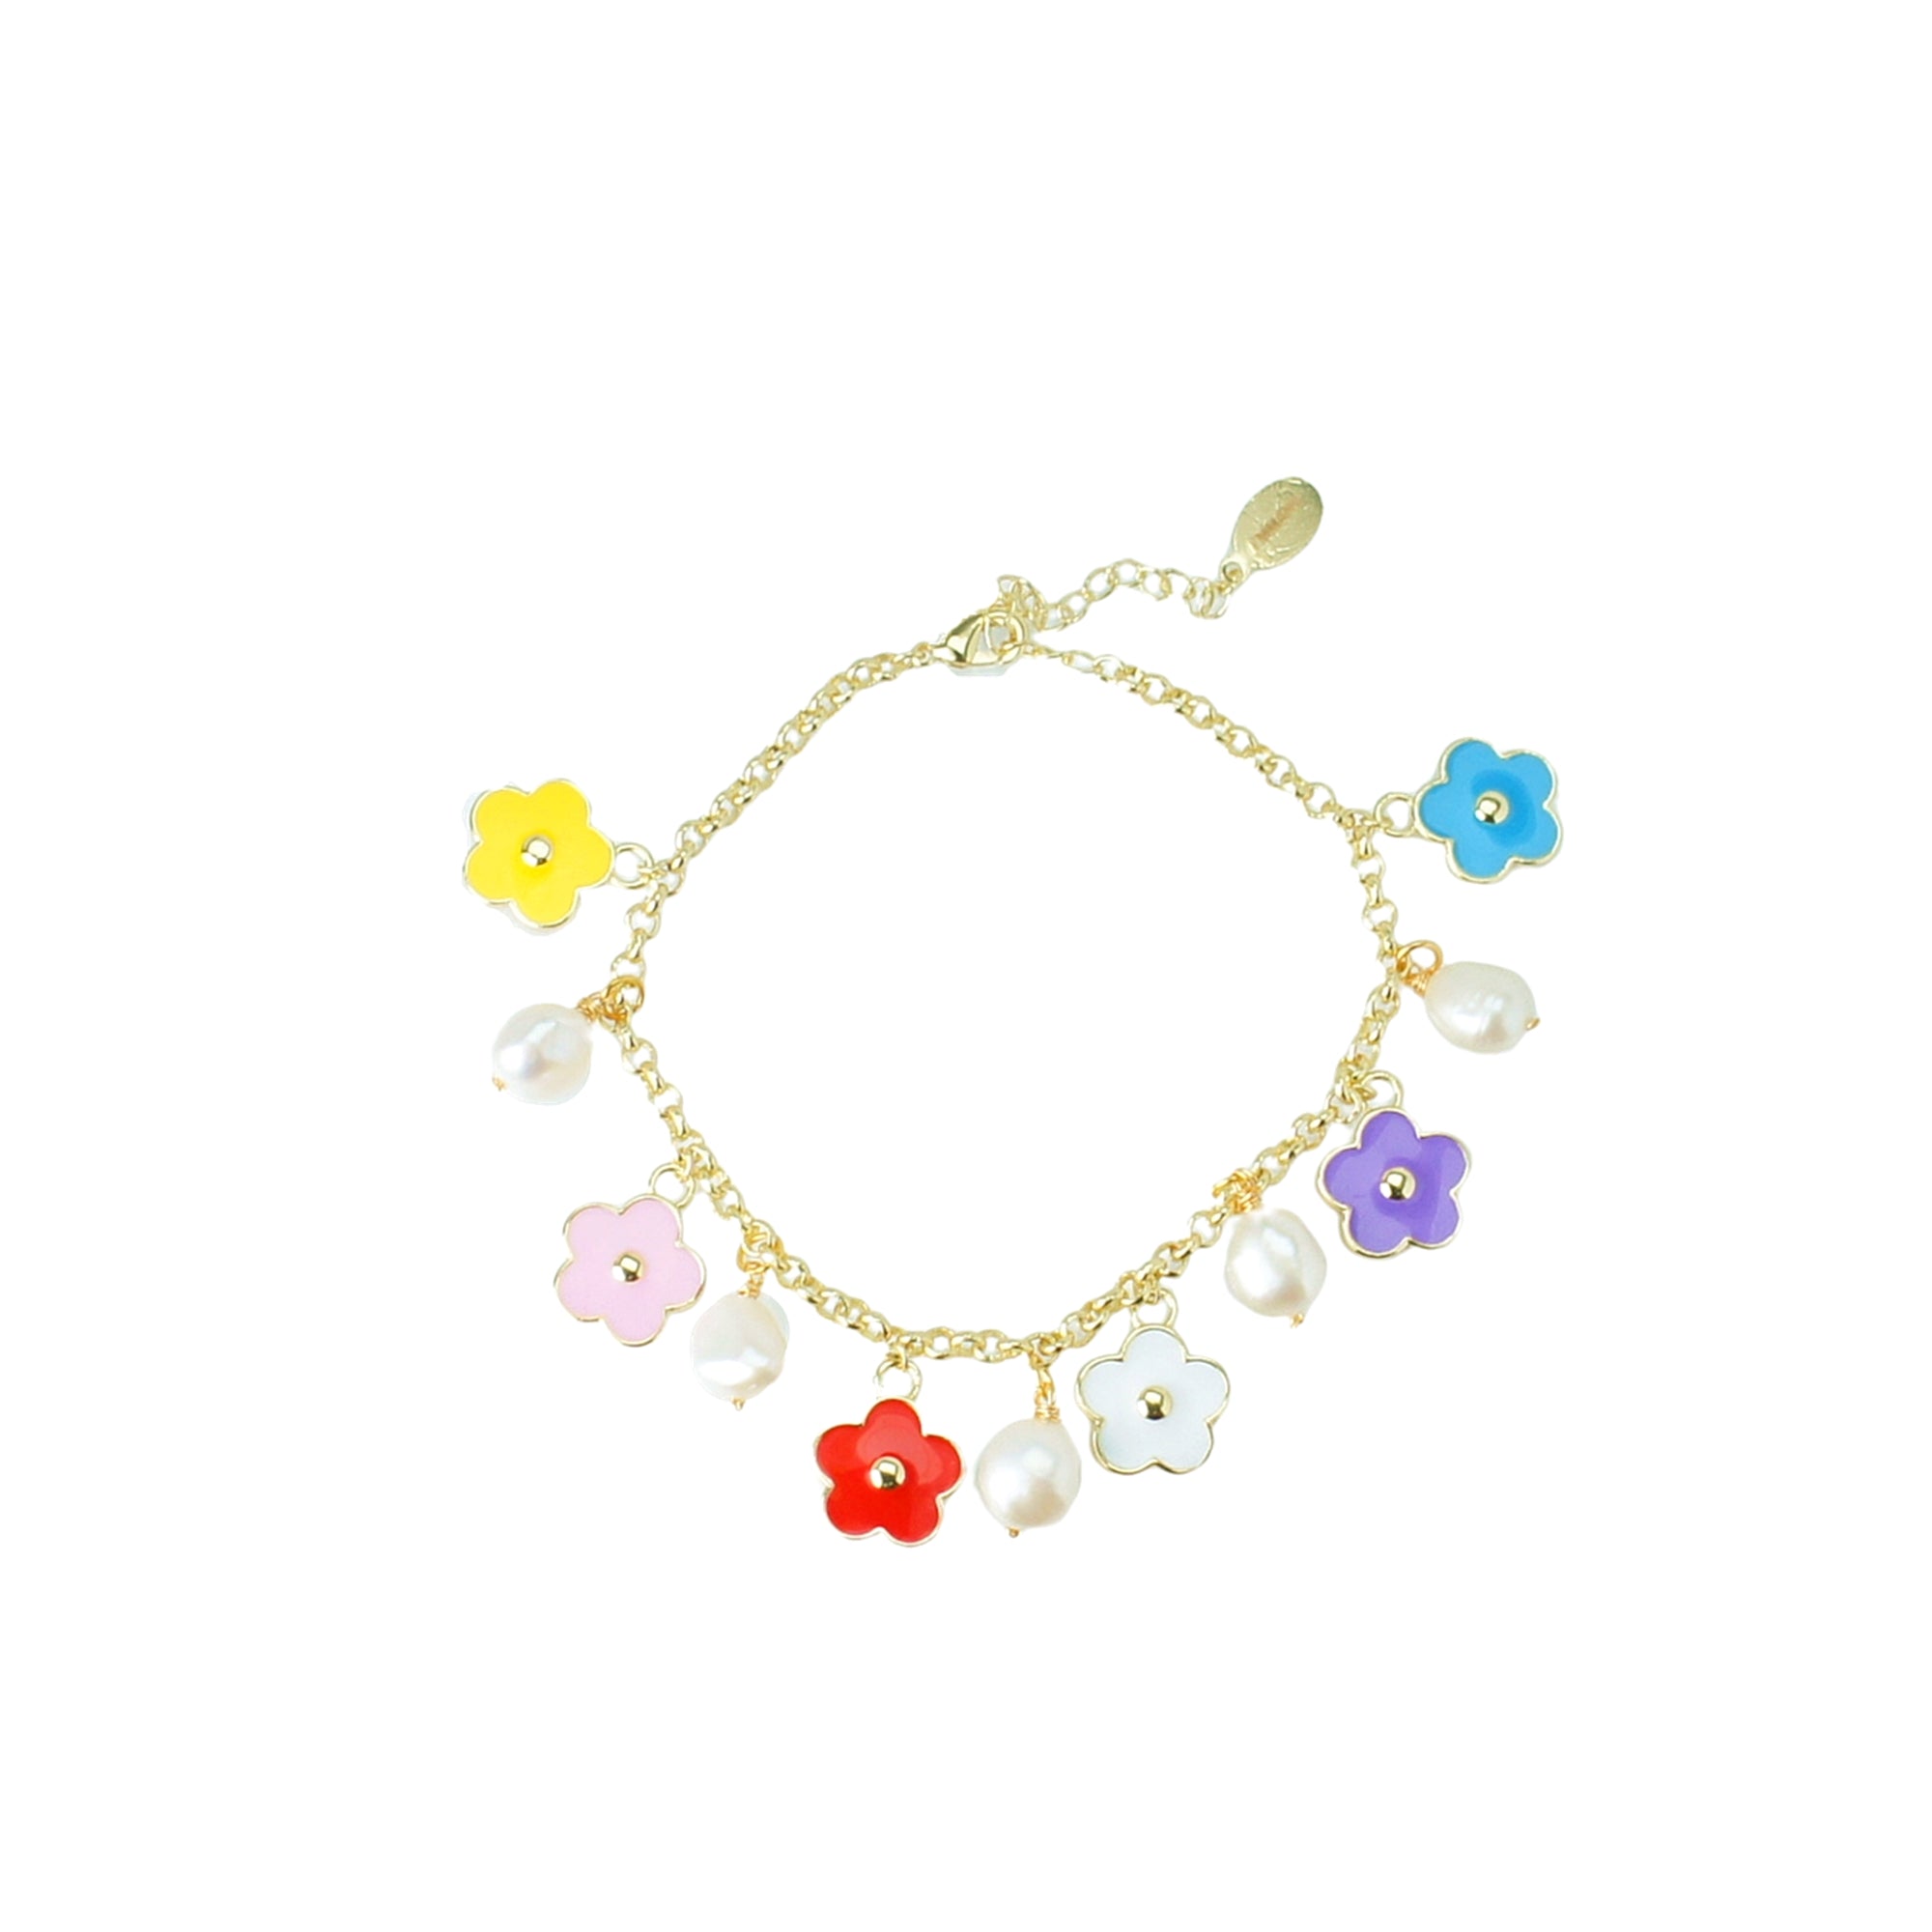 Flower Power Chain Bracelet with Enamel Flower Charms